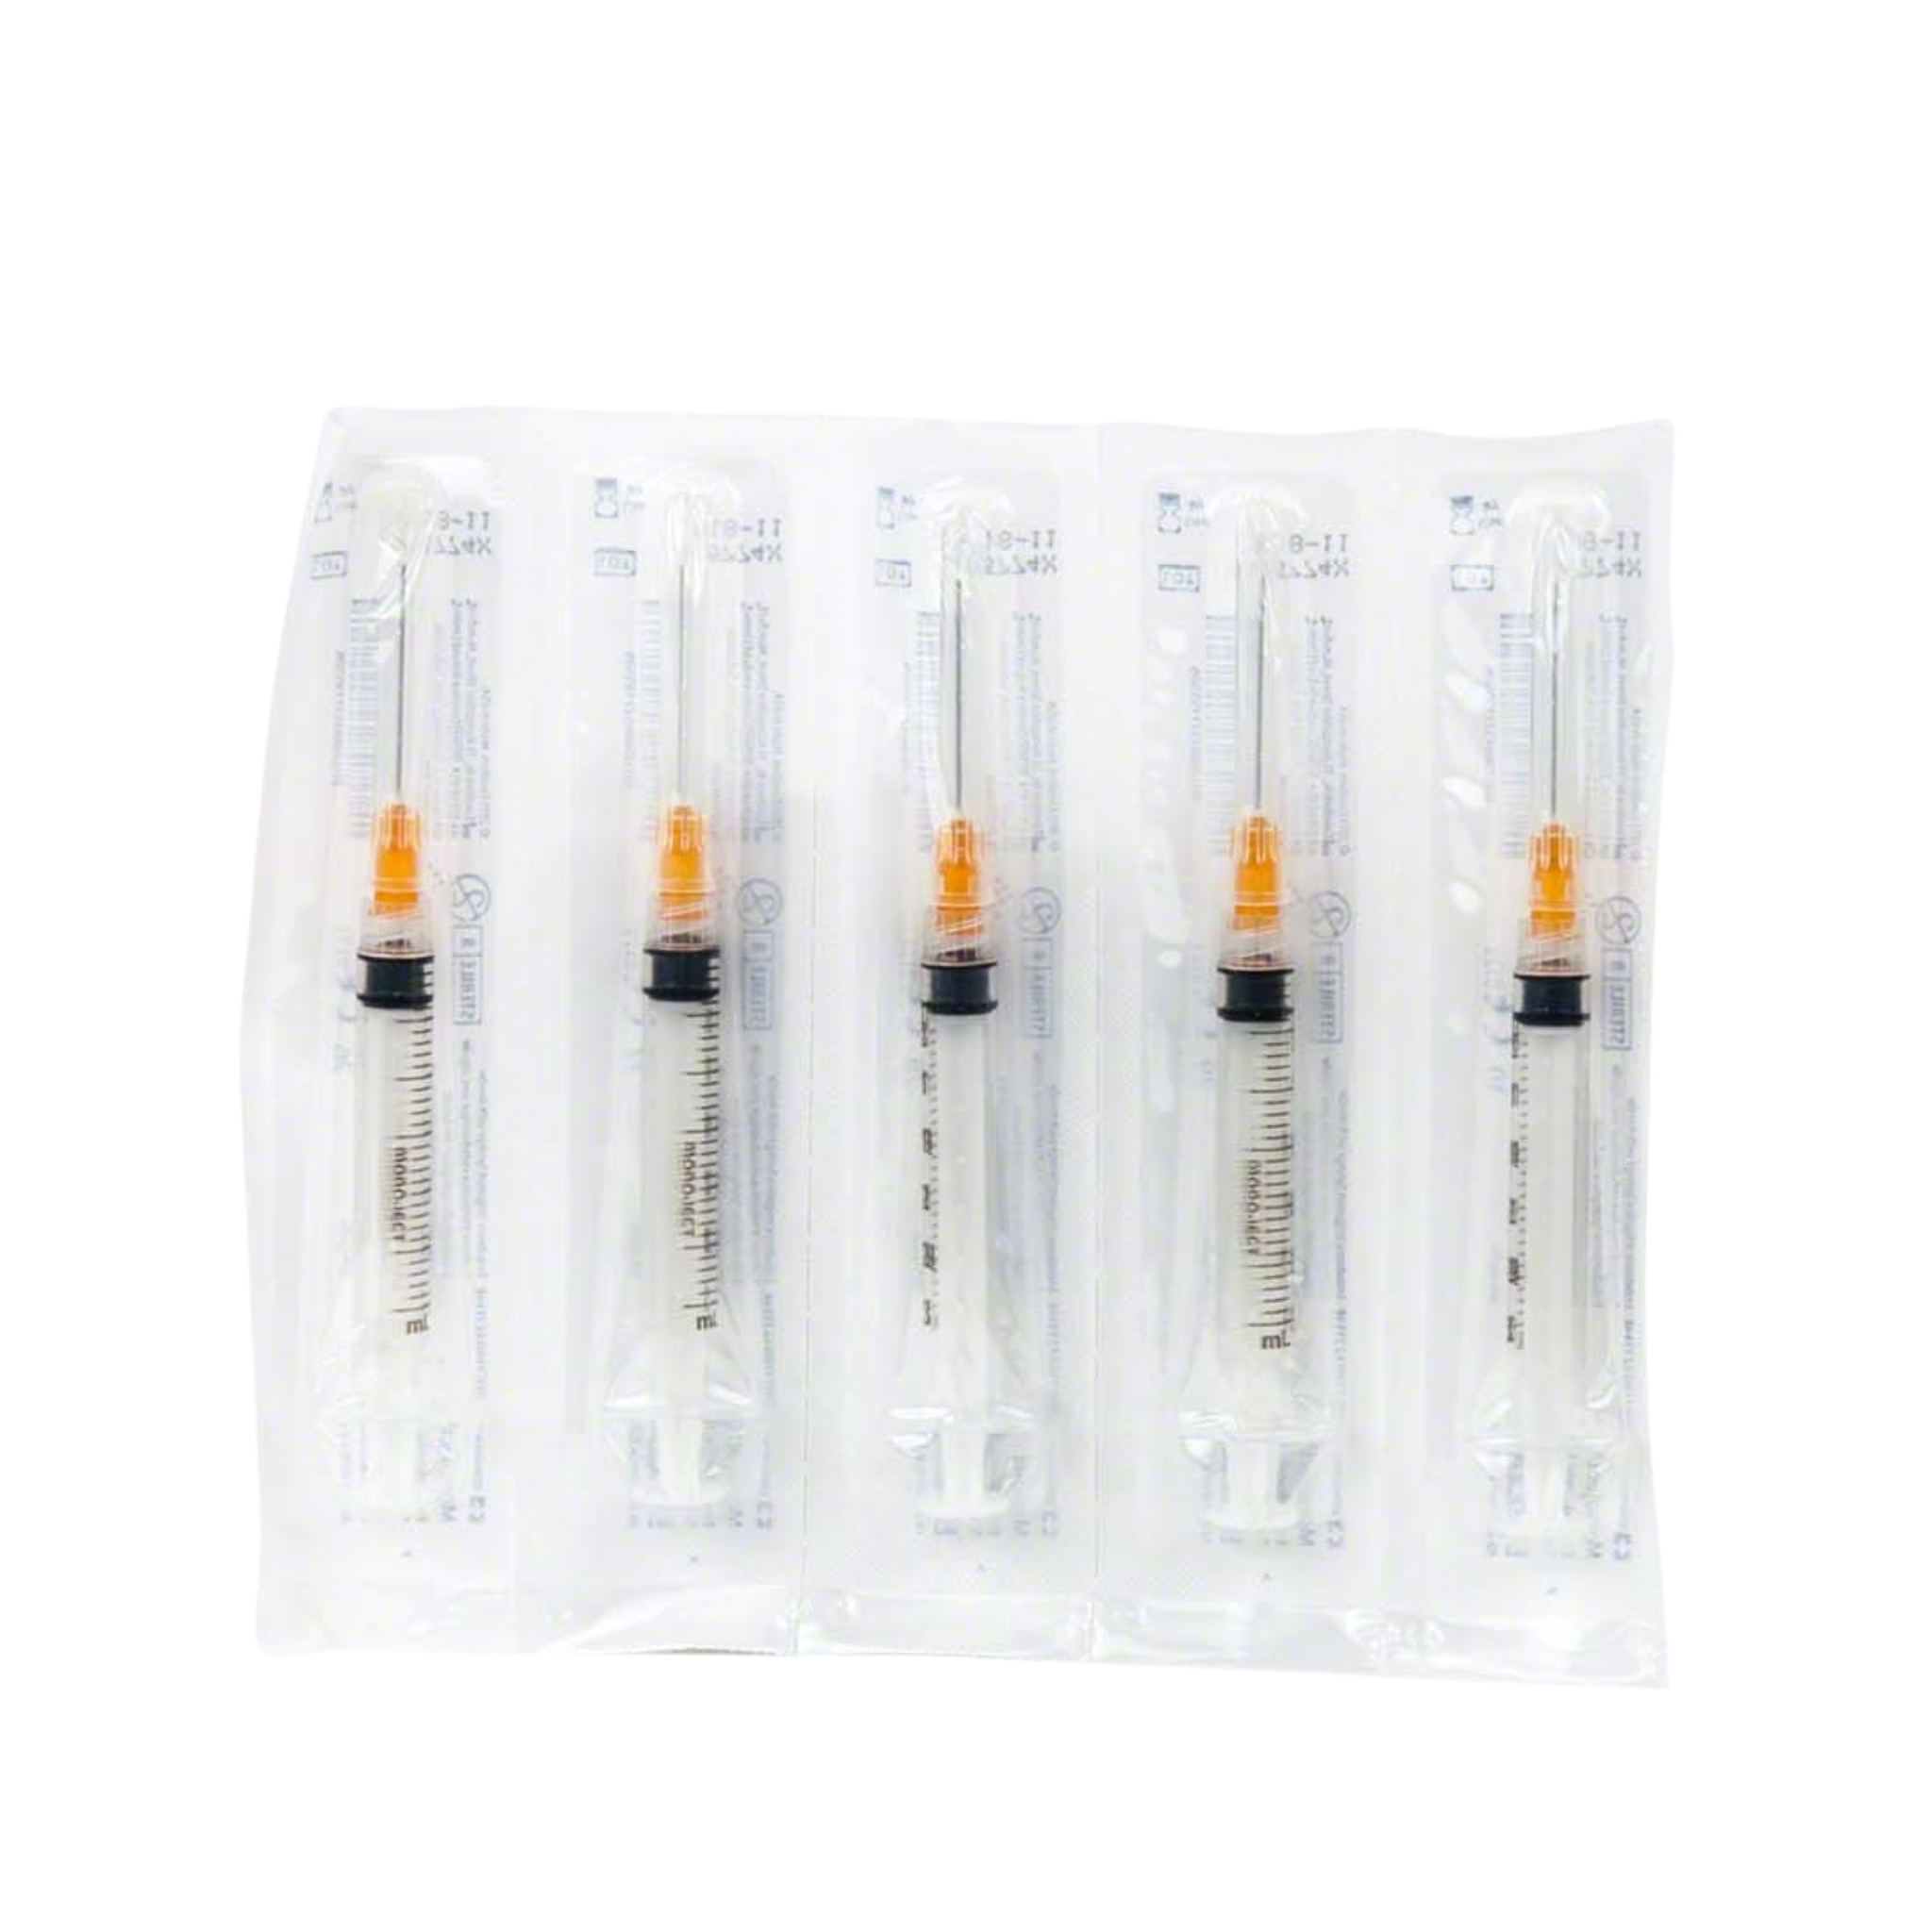 Endodontic irrigation syringe<br> 100 pcs.